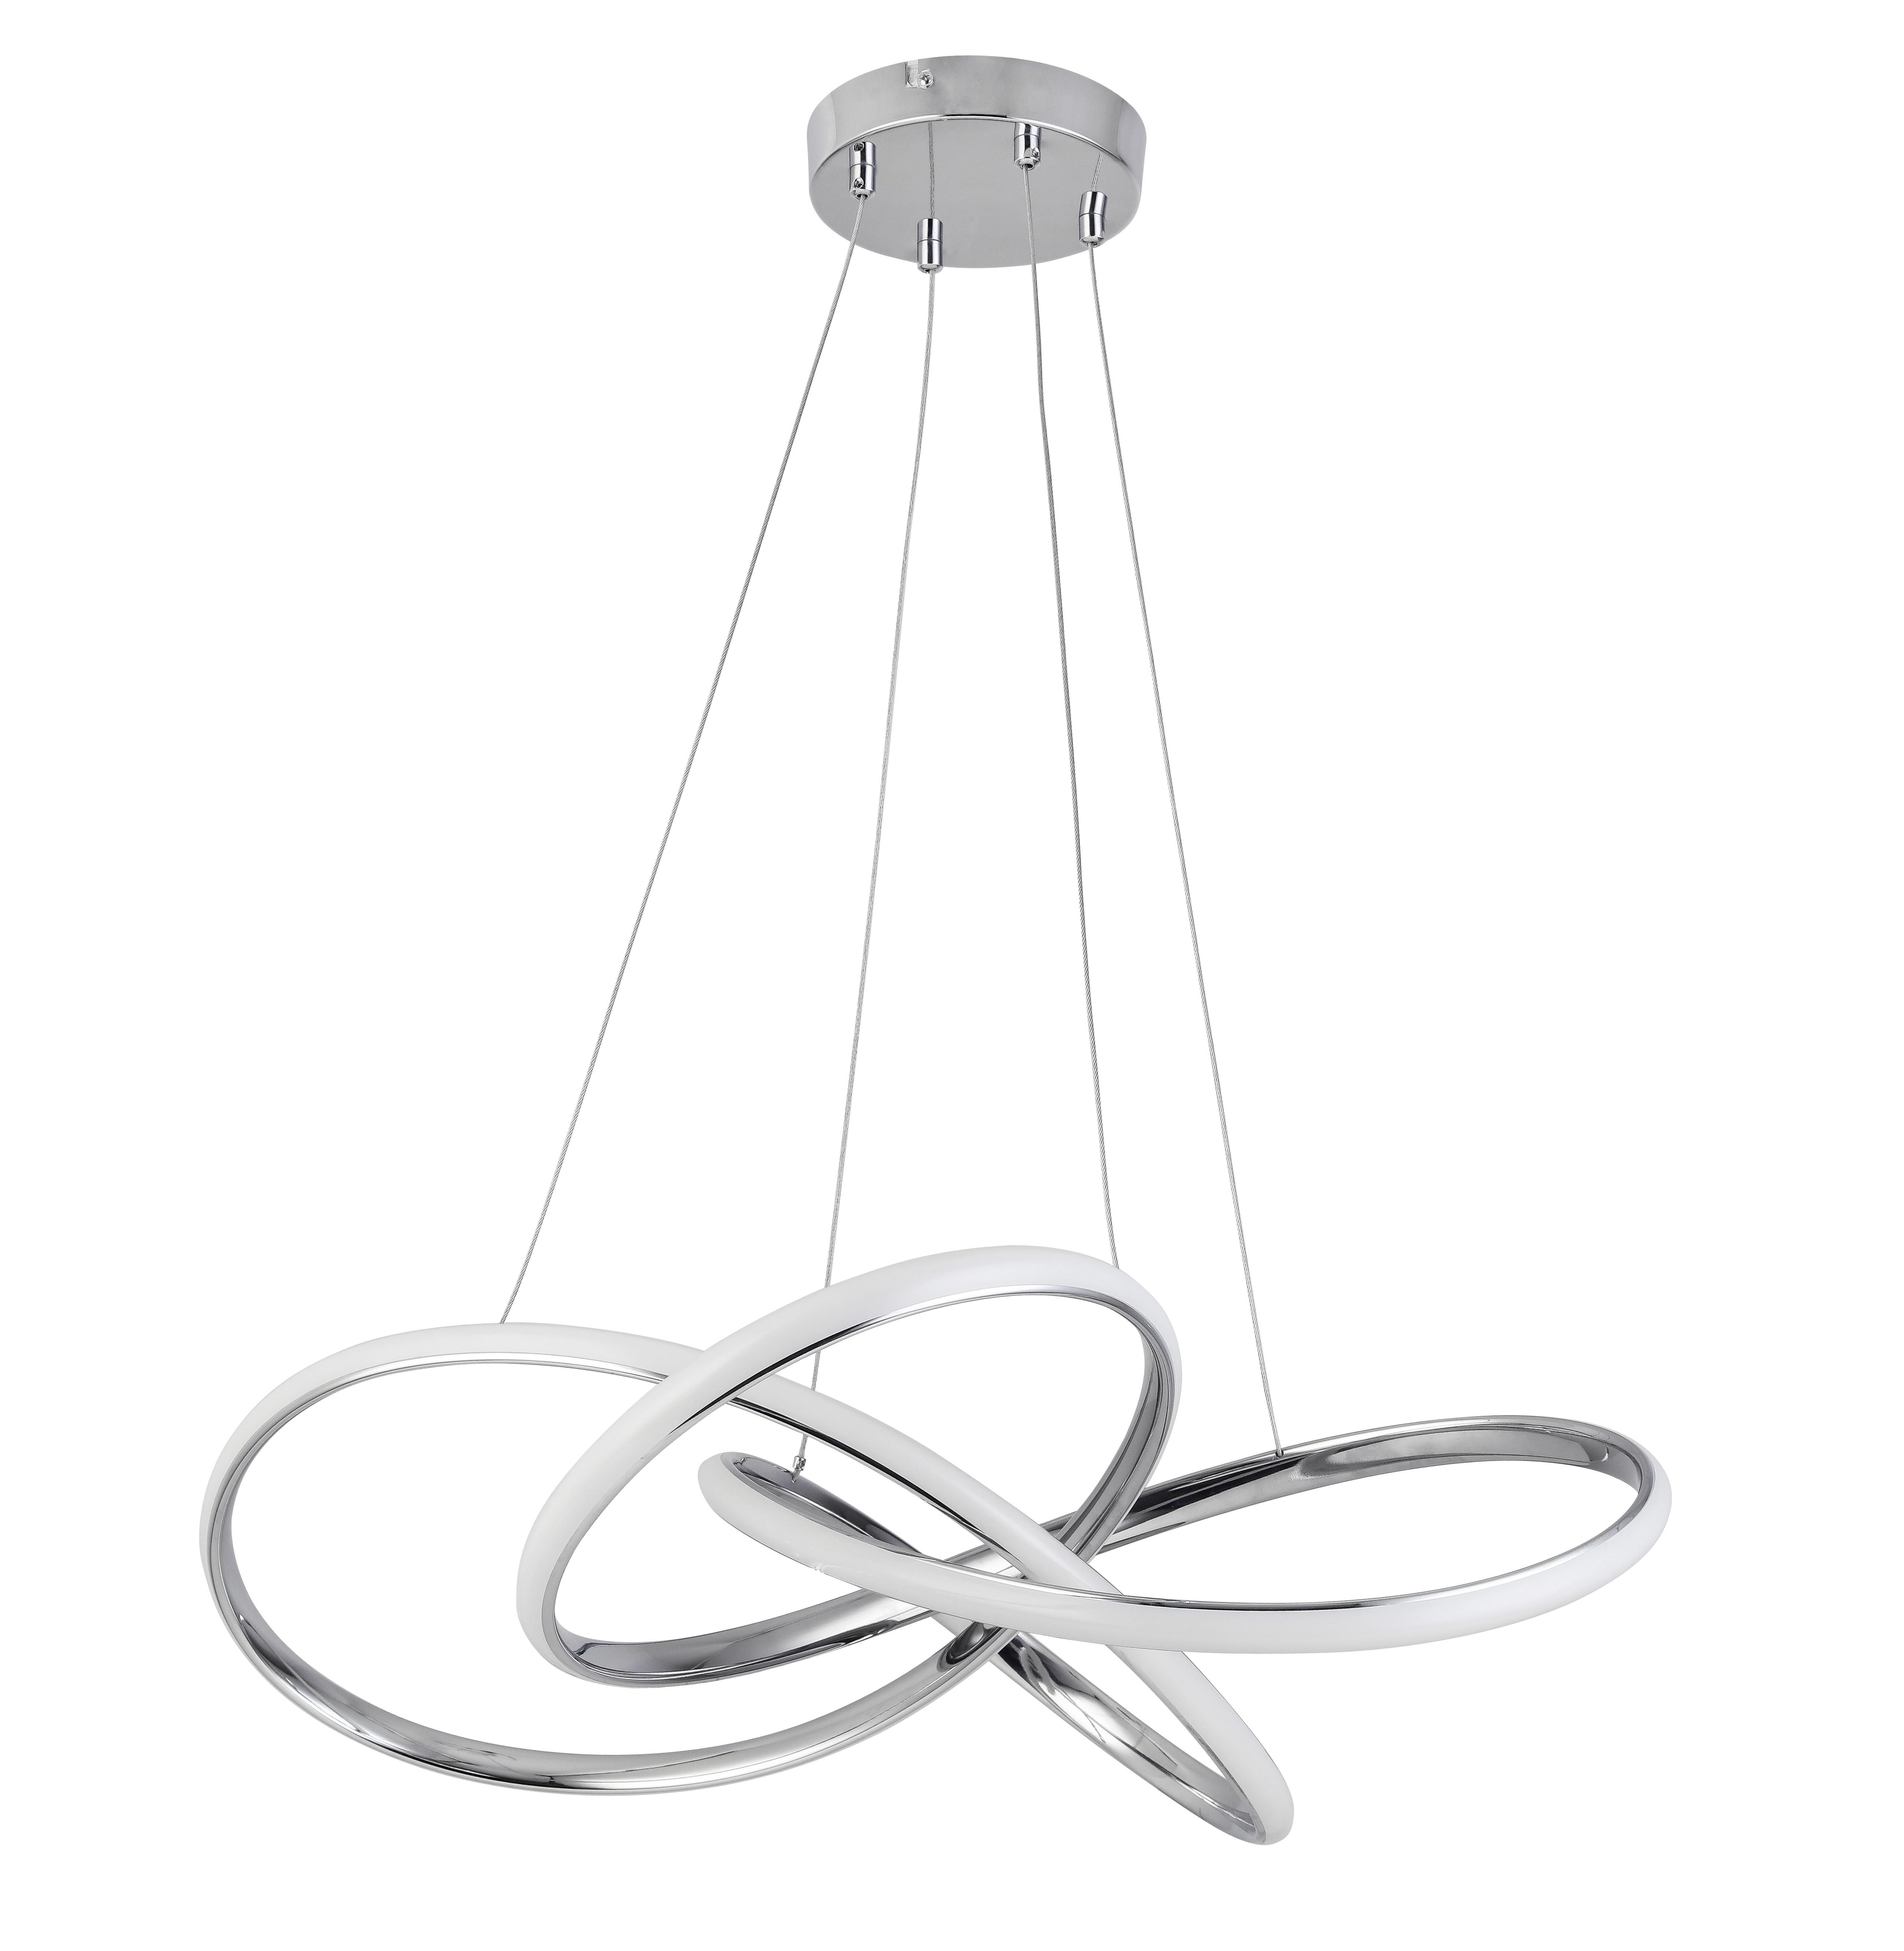 Viseča Led-svetilka Lenore - krom, Moderno, kovina/umetna masa (60/120cm) - Premium Living